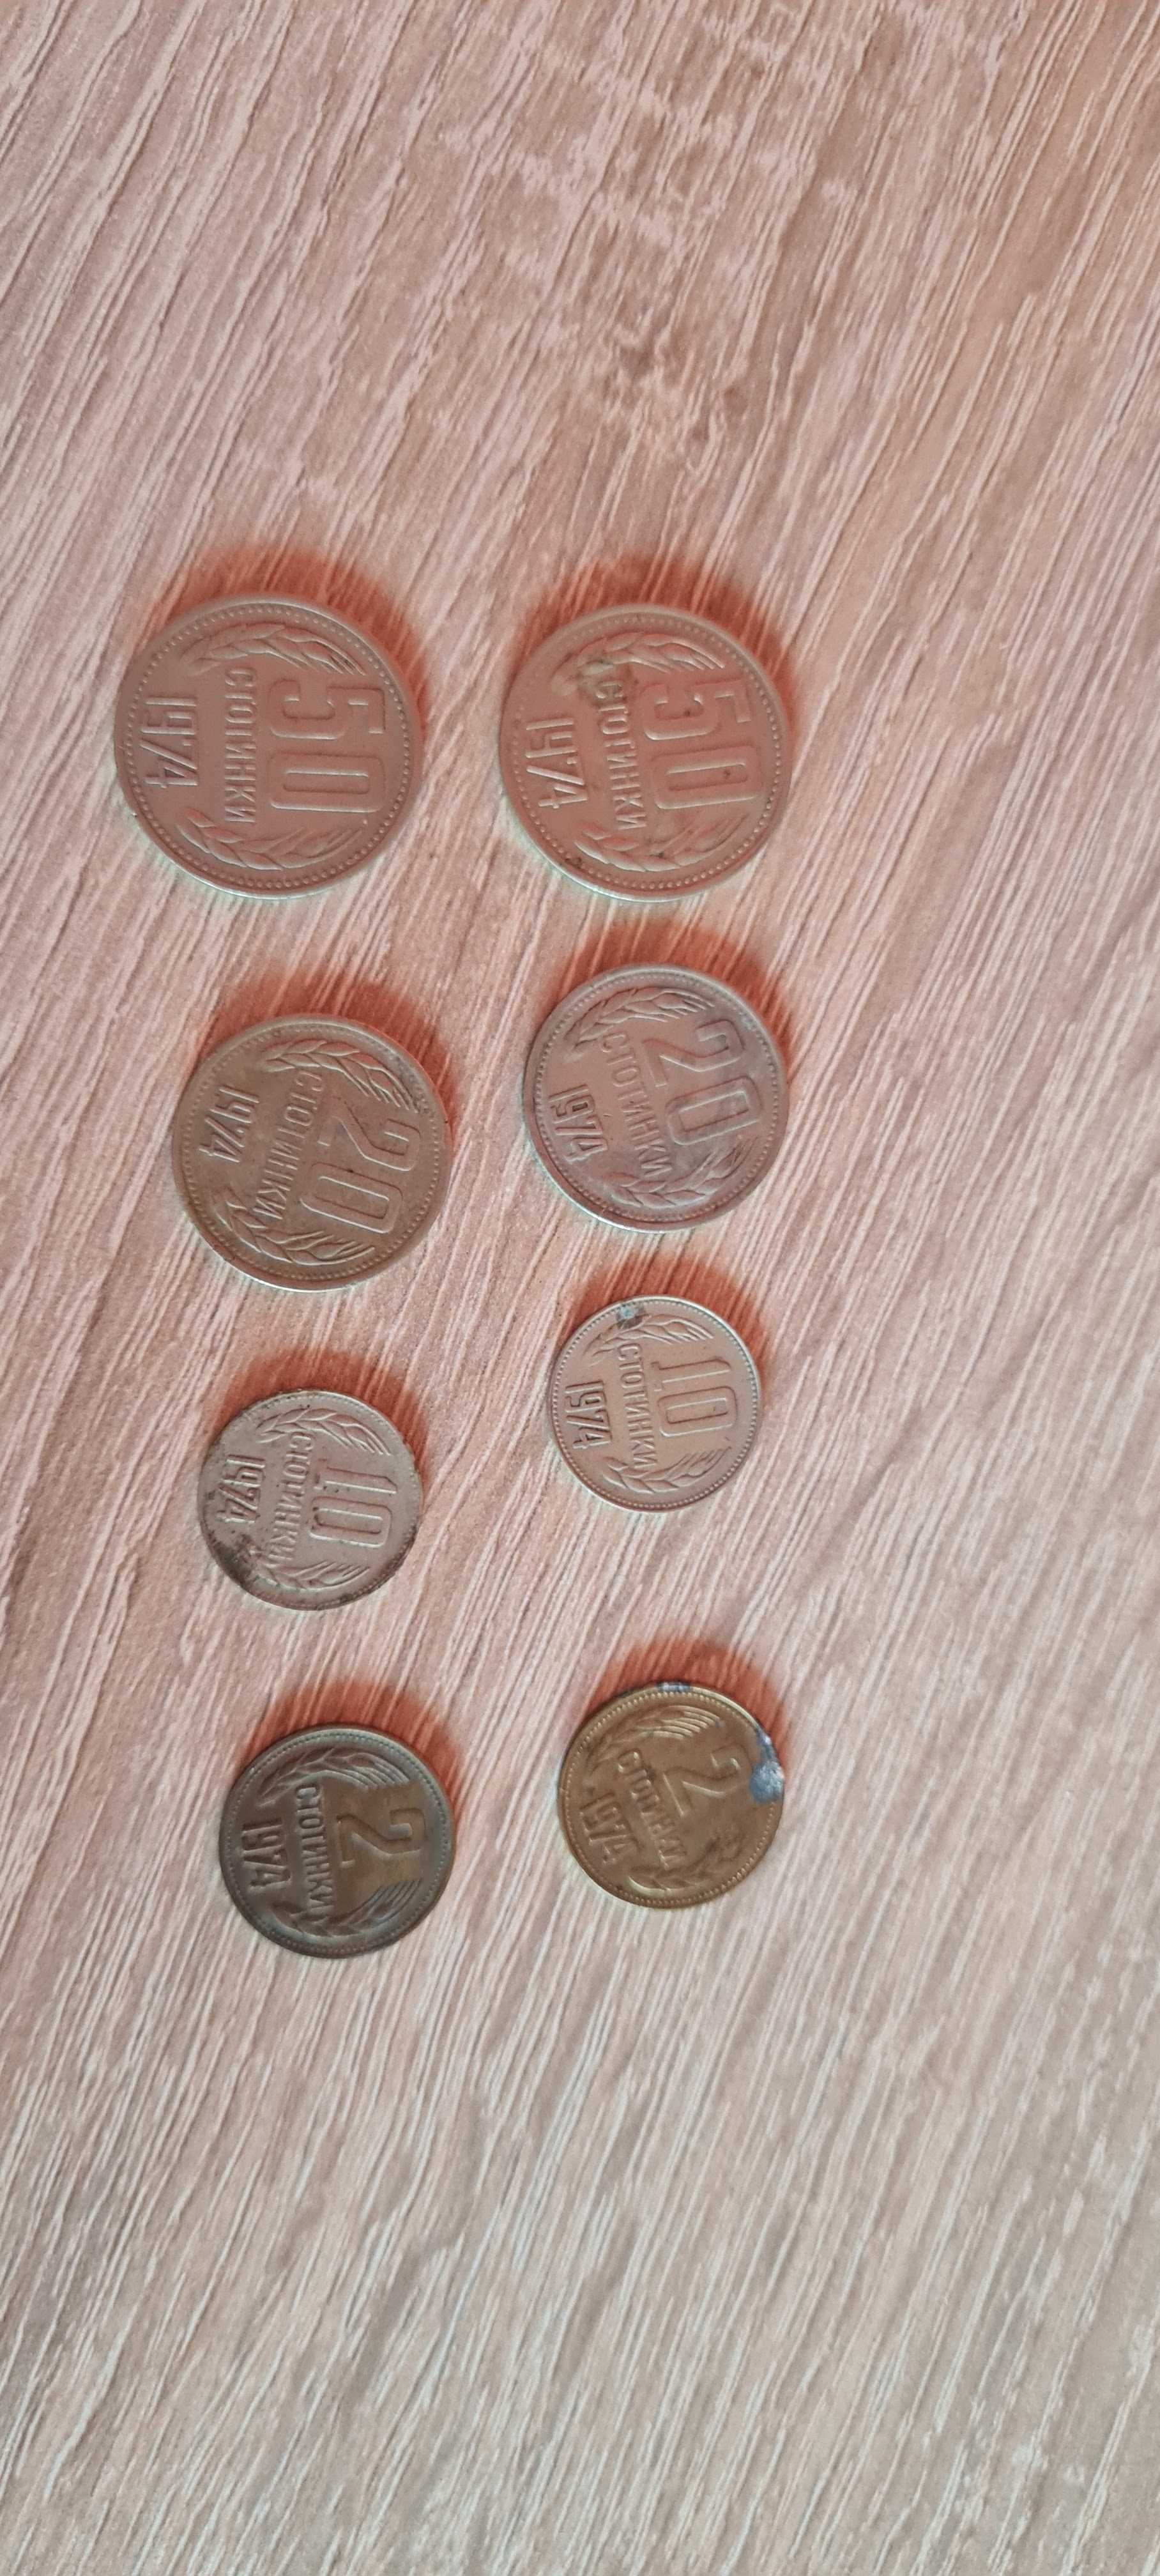 Лотове стари бг монети